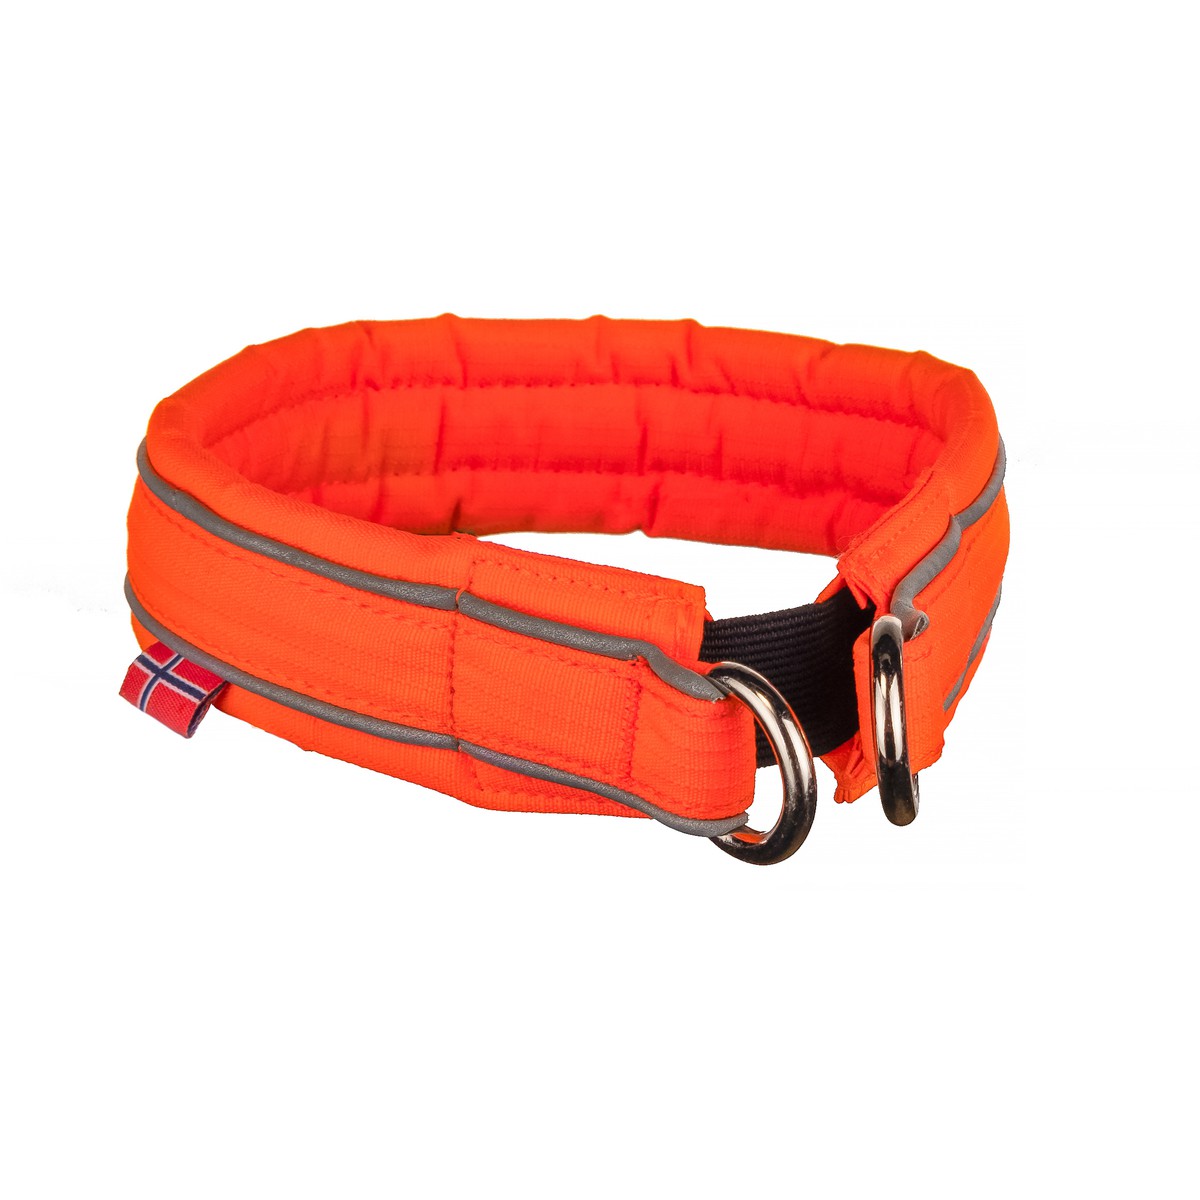 Non-Stop dogwear Safe Collier Safe T60 Orange T60